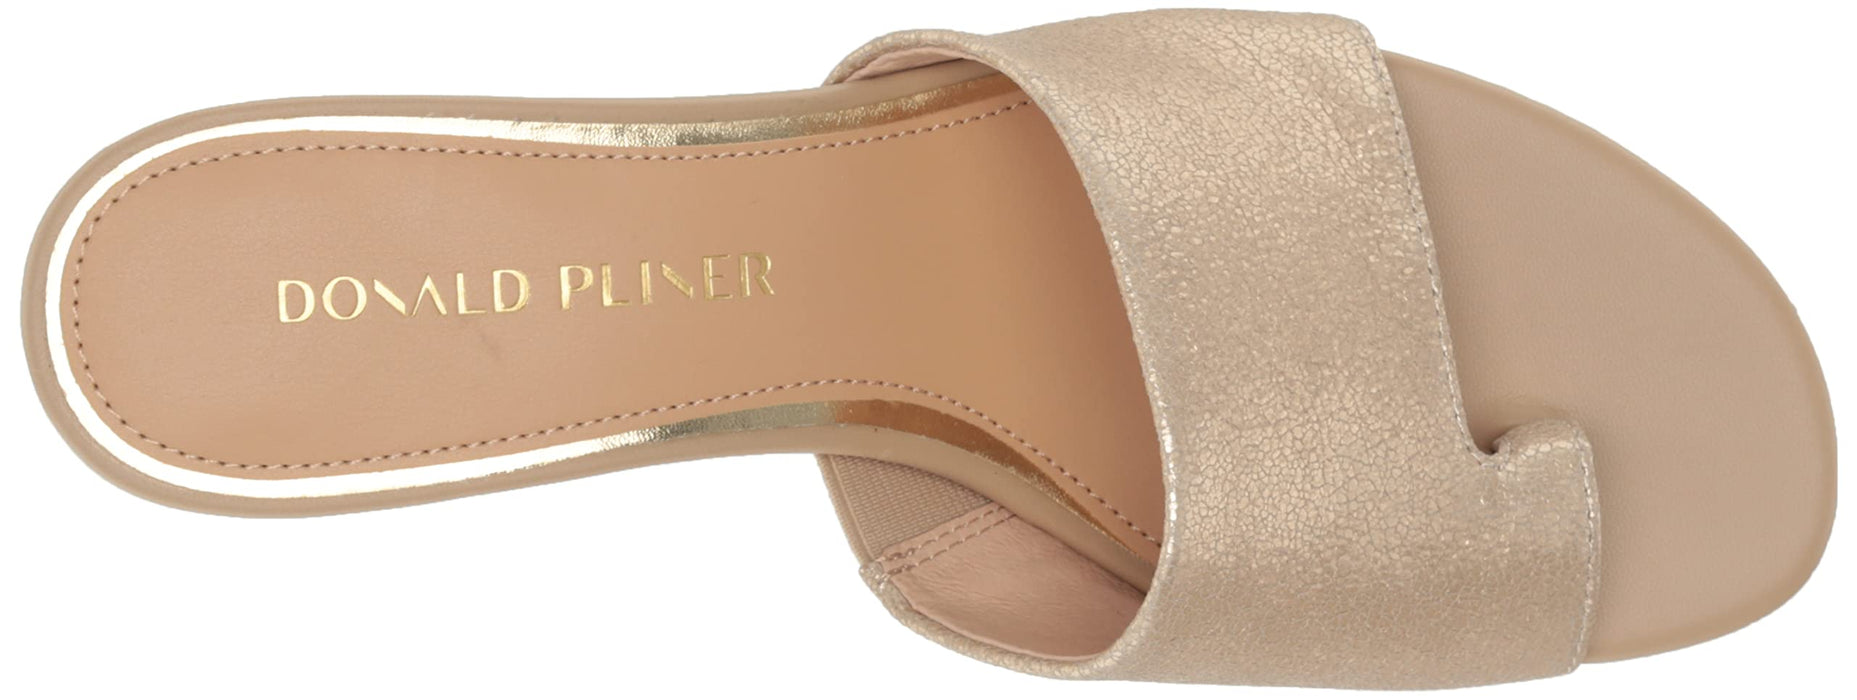 Donald Pliner Women's Melros Heeled Sandal